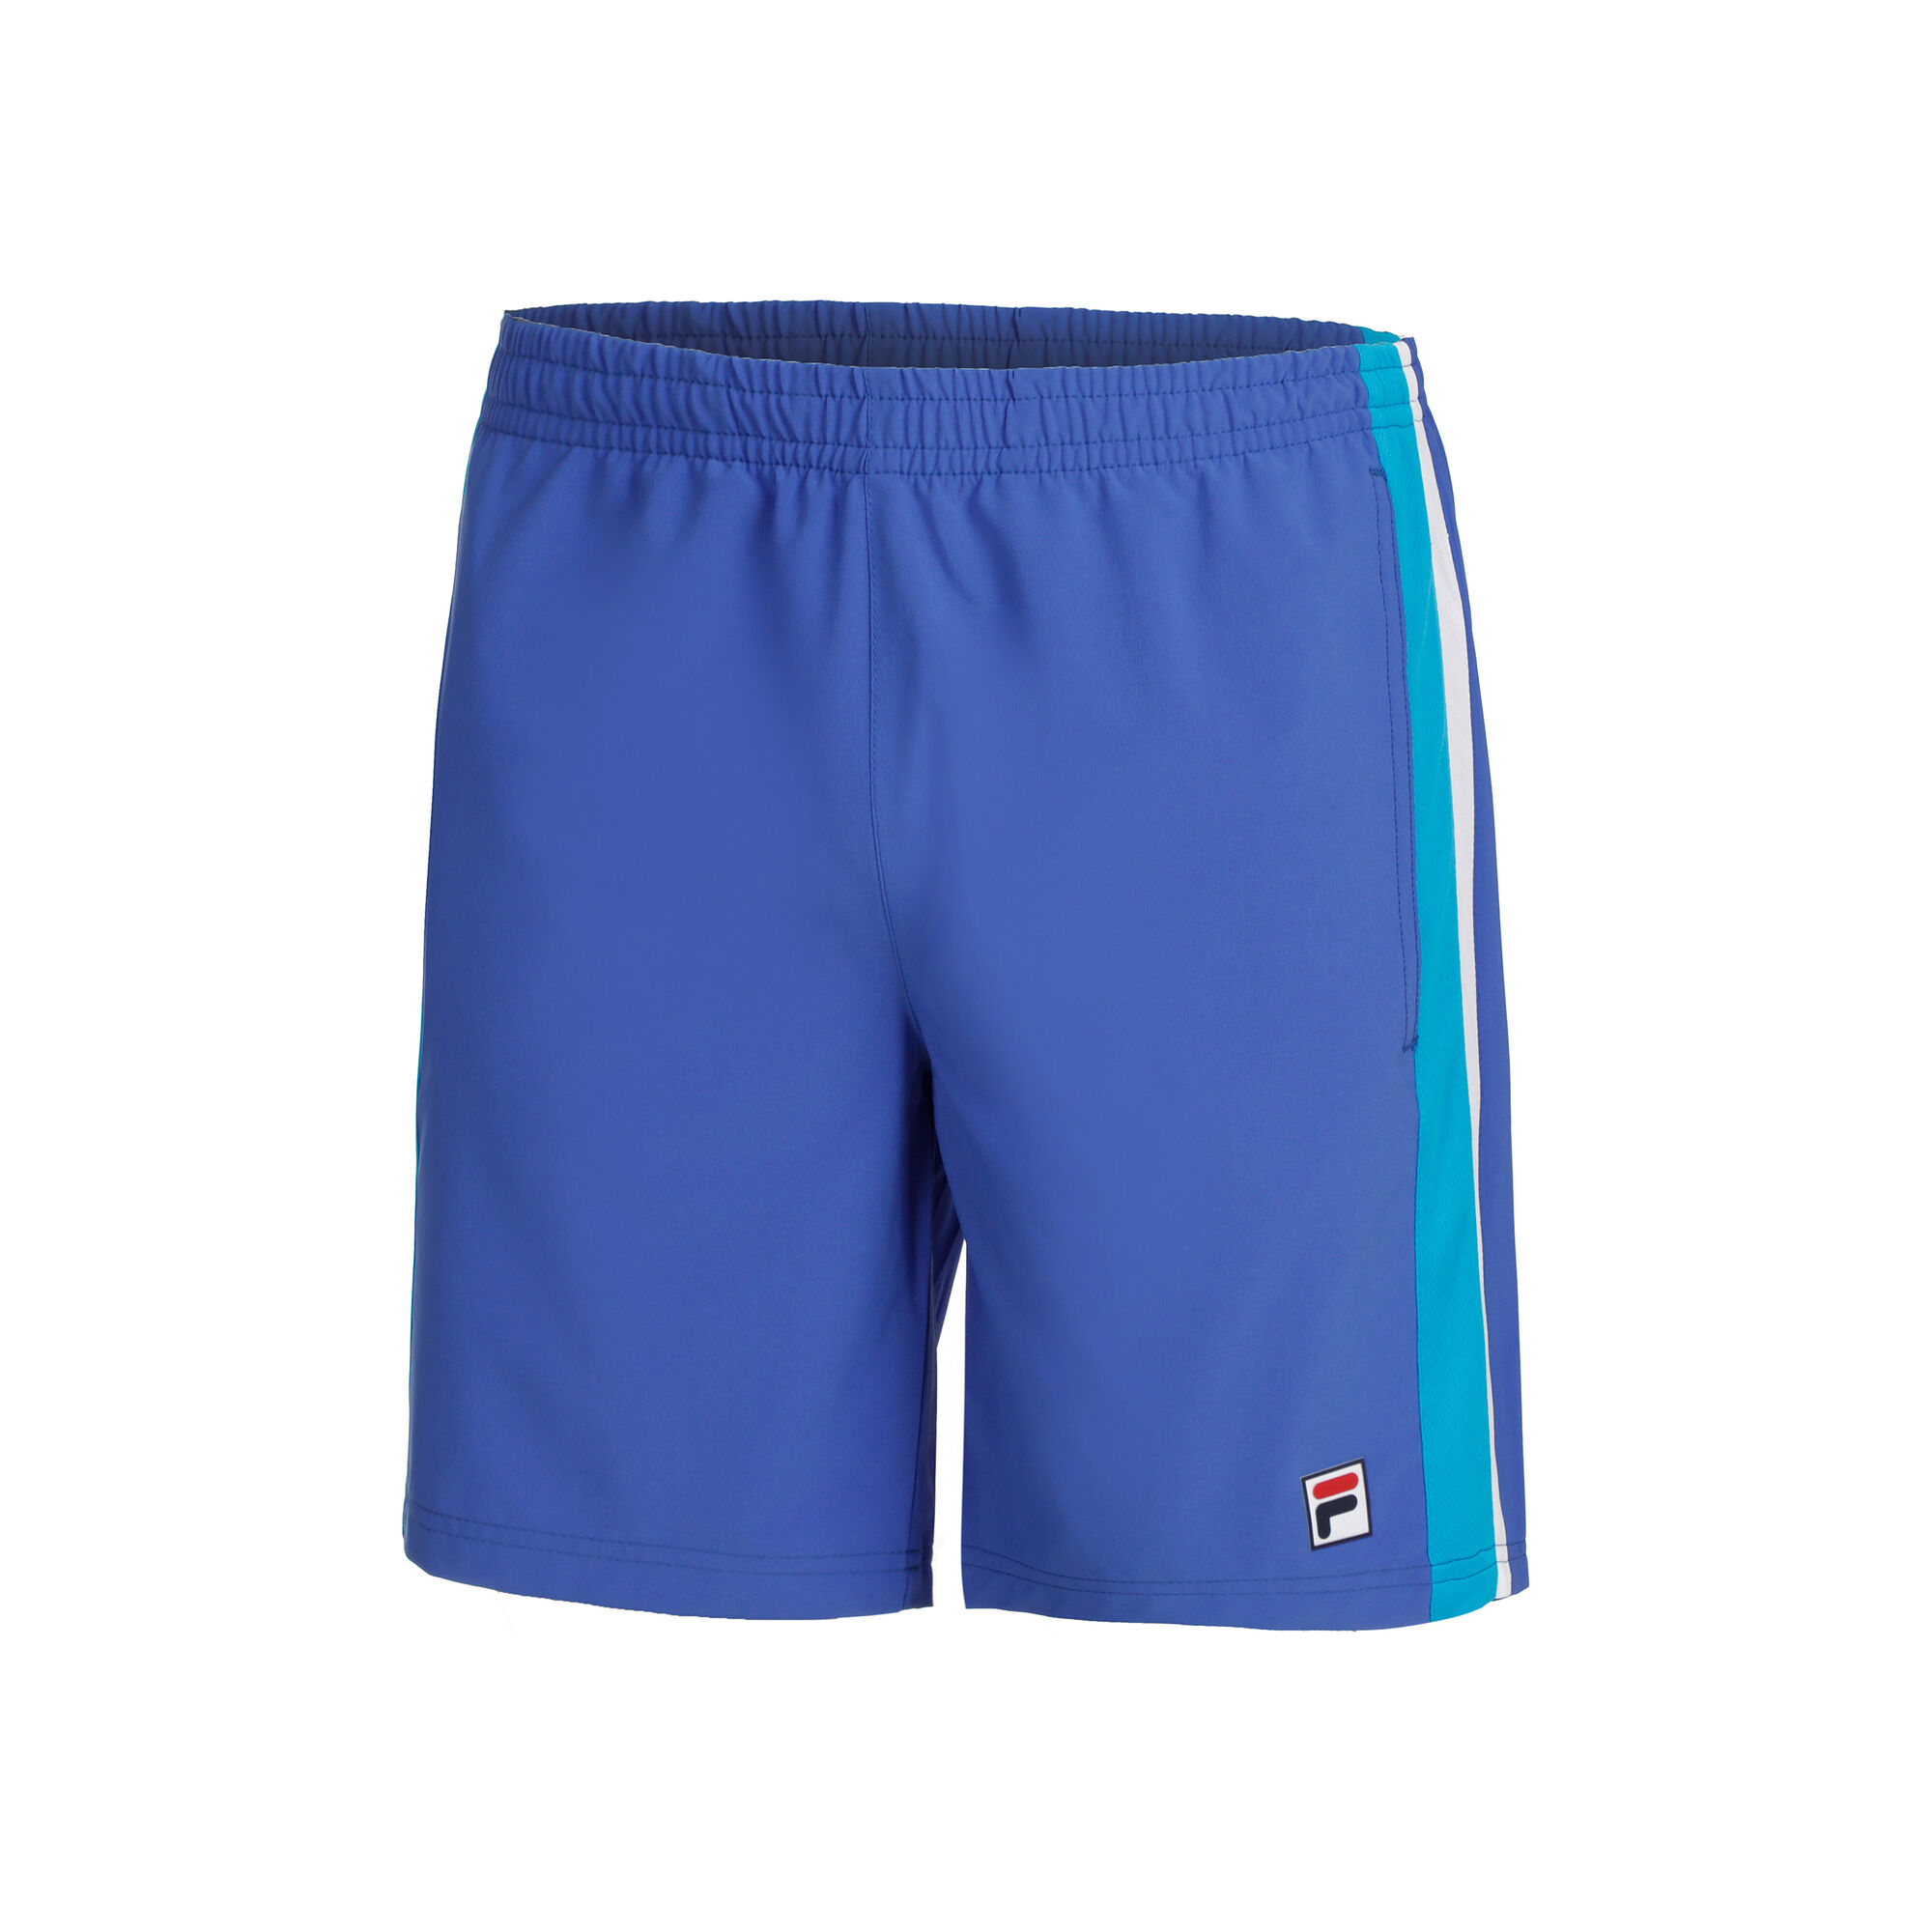 Tegne forsikring Ristede dramatisk buy Fila Nicolo Shorts Men - Blue, Turquoise online | Tennis-Point